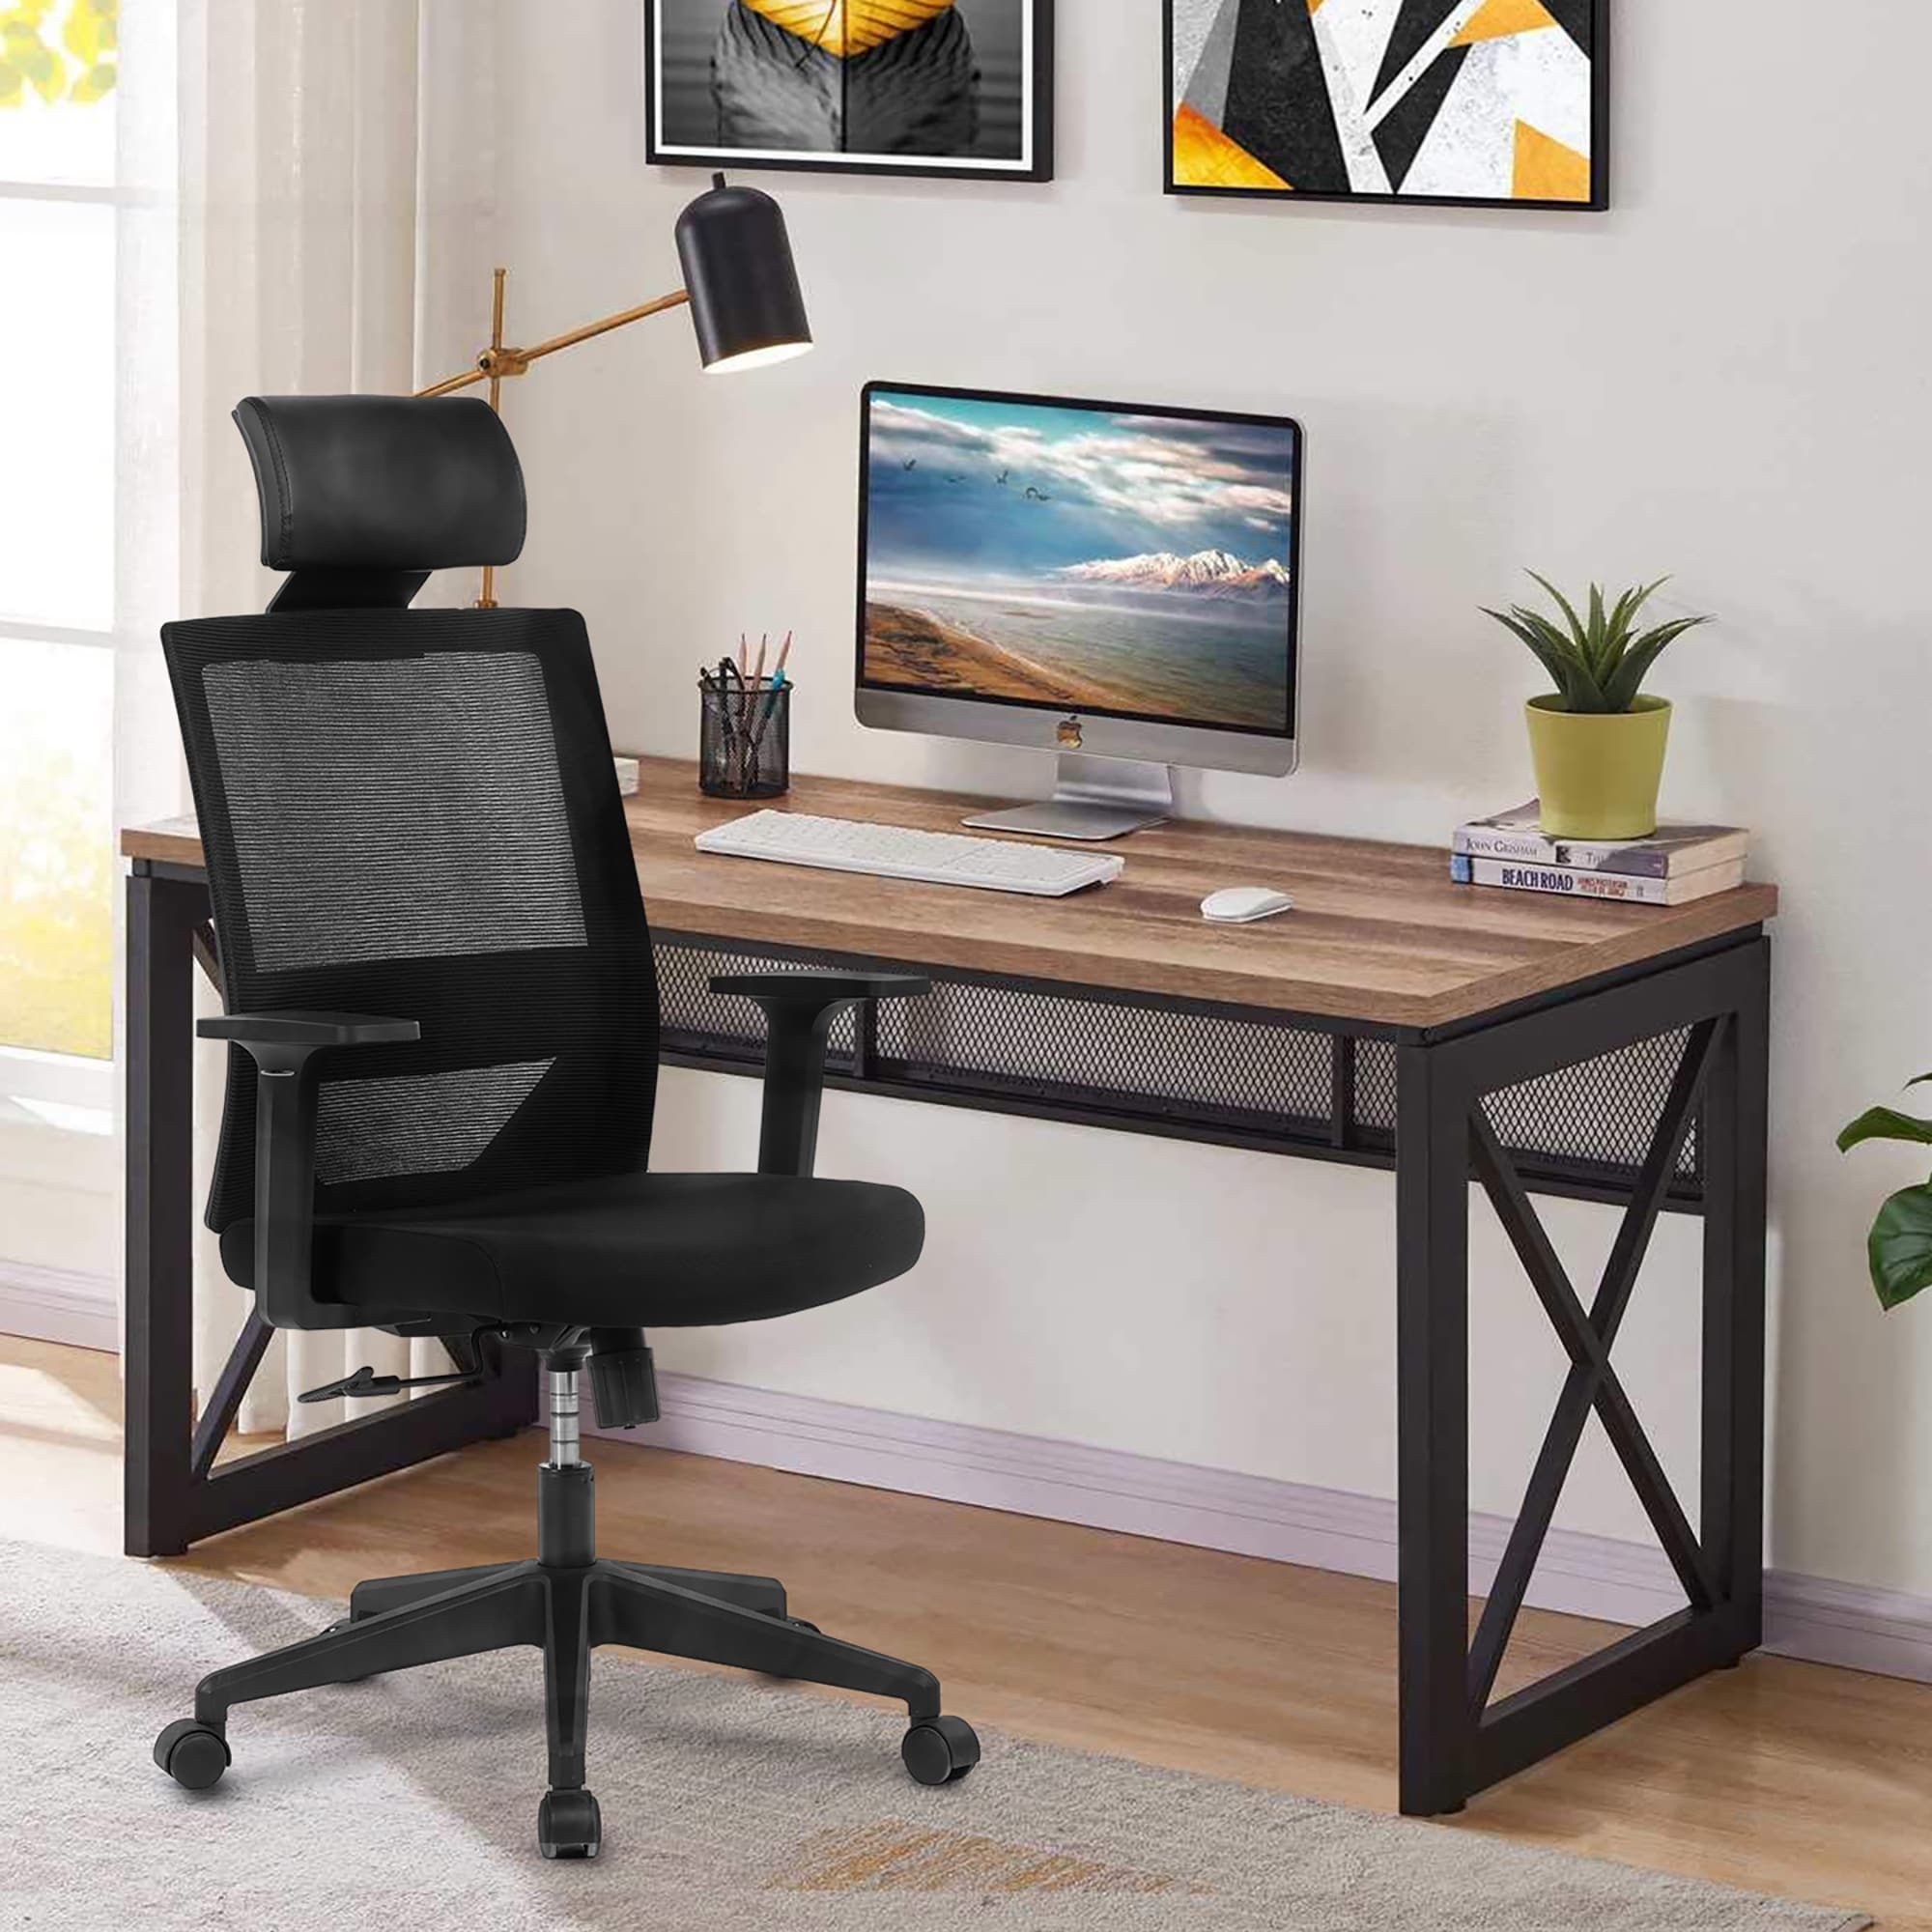 https://ak1.ostkcdn.com/images/products/is/images/direct/78e9072295ec0d66ef7cff8b0400874e7e13e8fe/Homall-Office-Chair-Ergonomic-Desk-Chair-with-Lumbar-Support%2CBlack.jpg